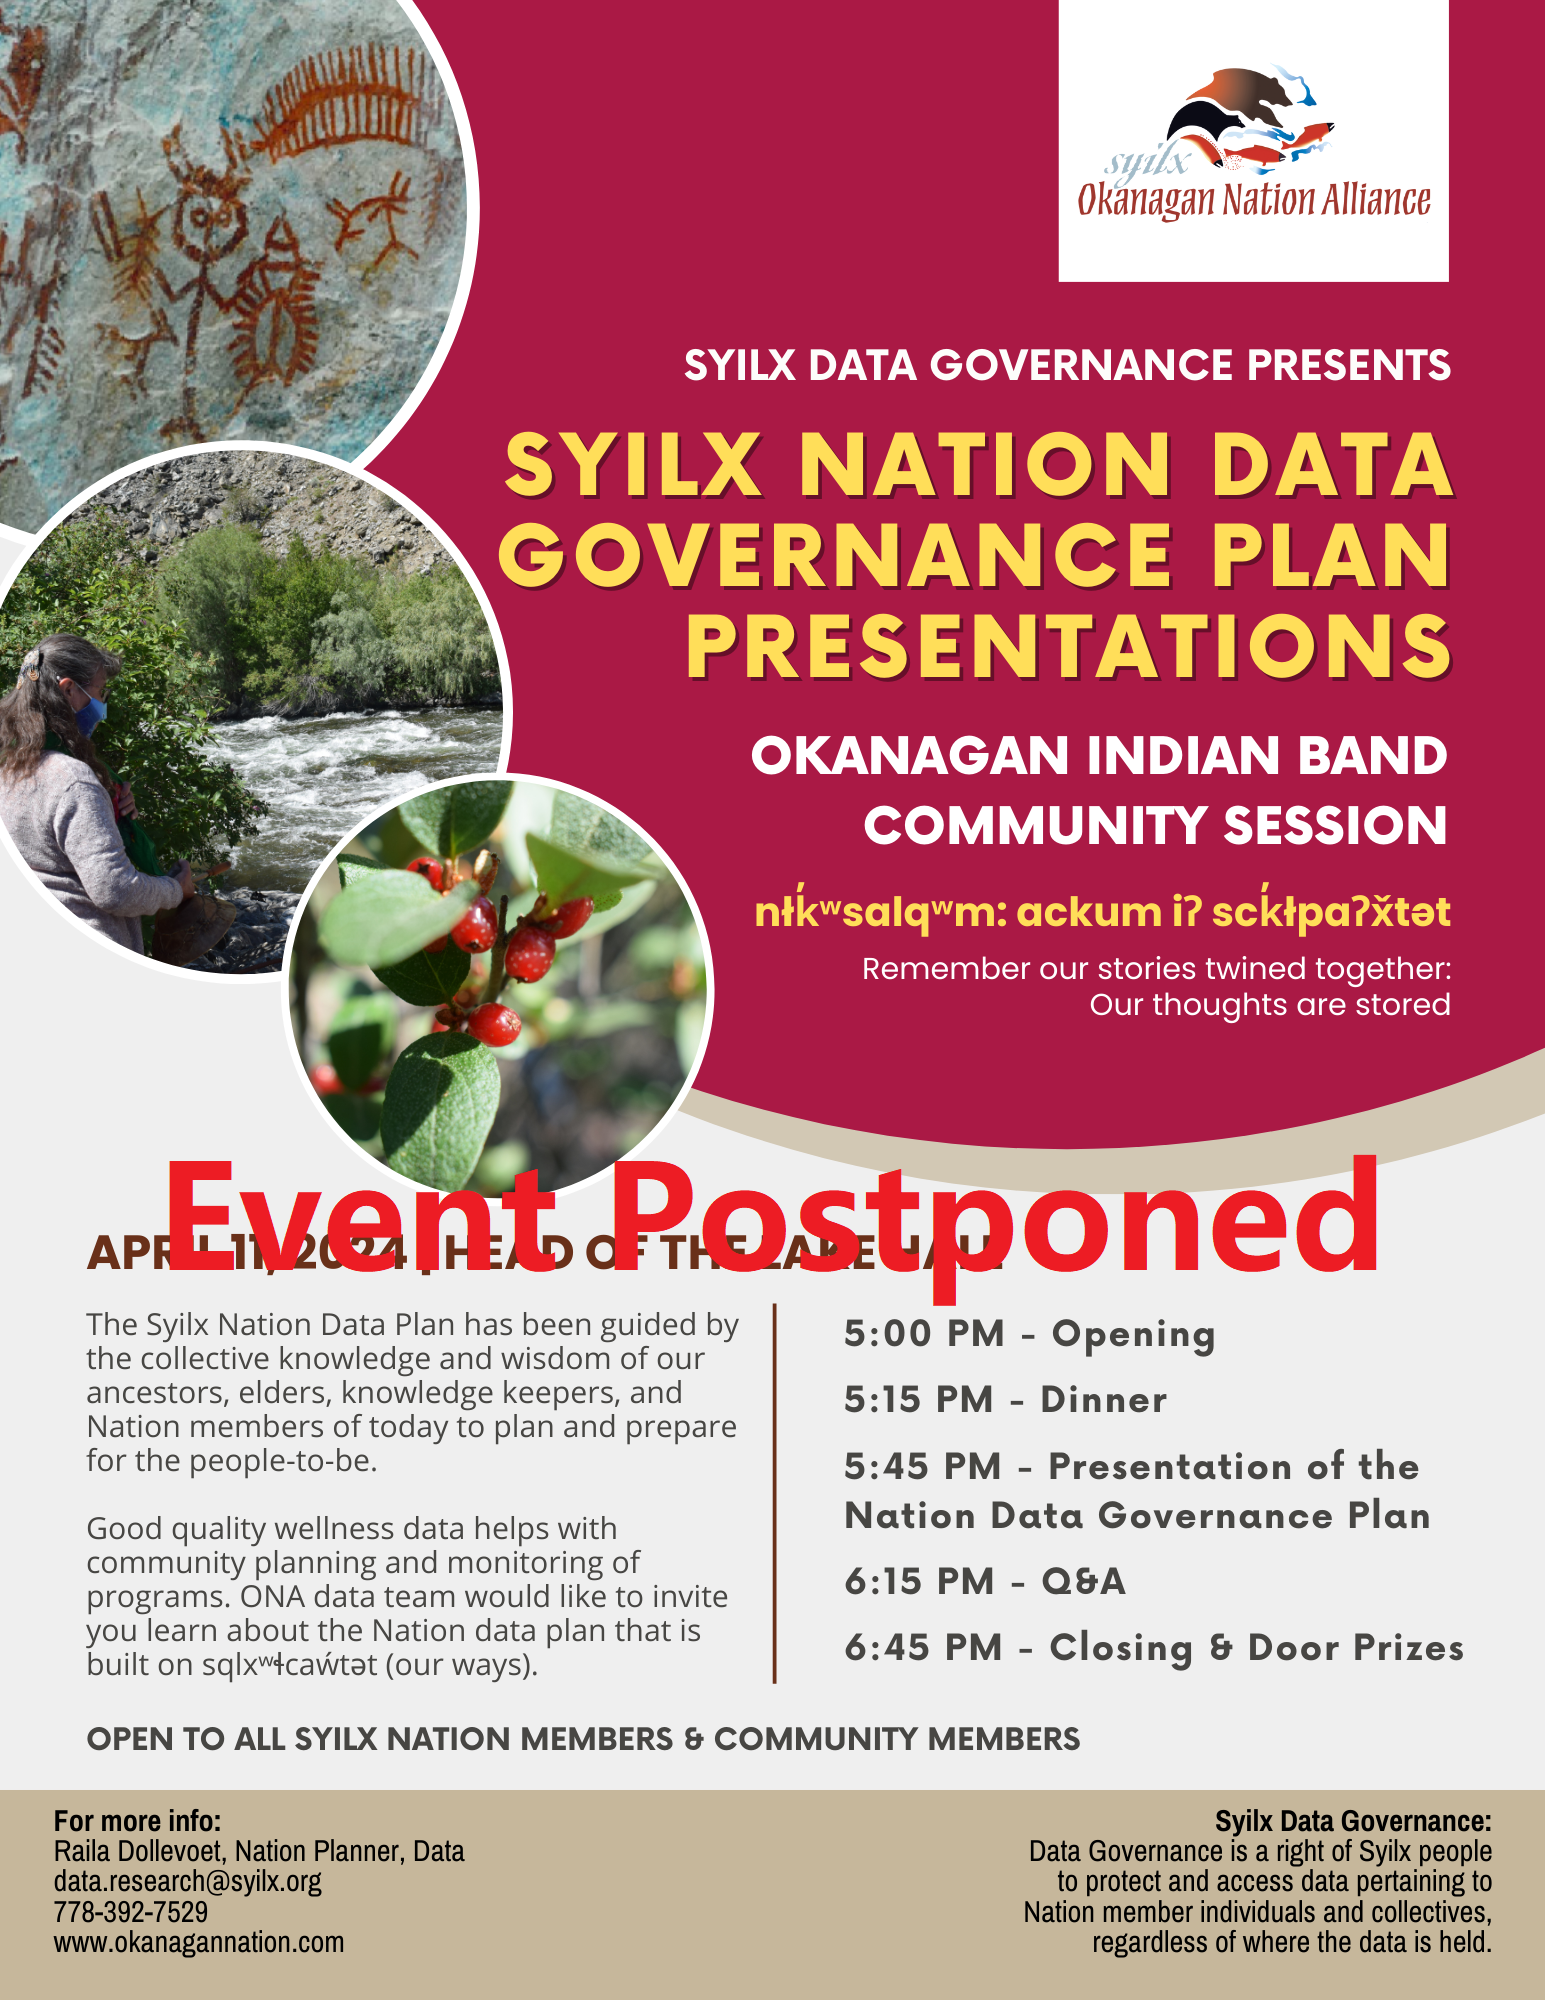 Syilx Data Governance meeting Postponed